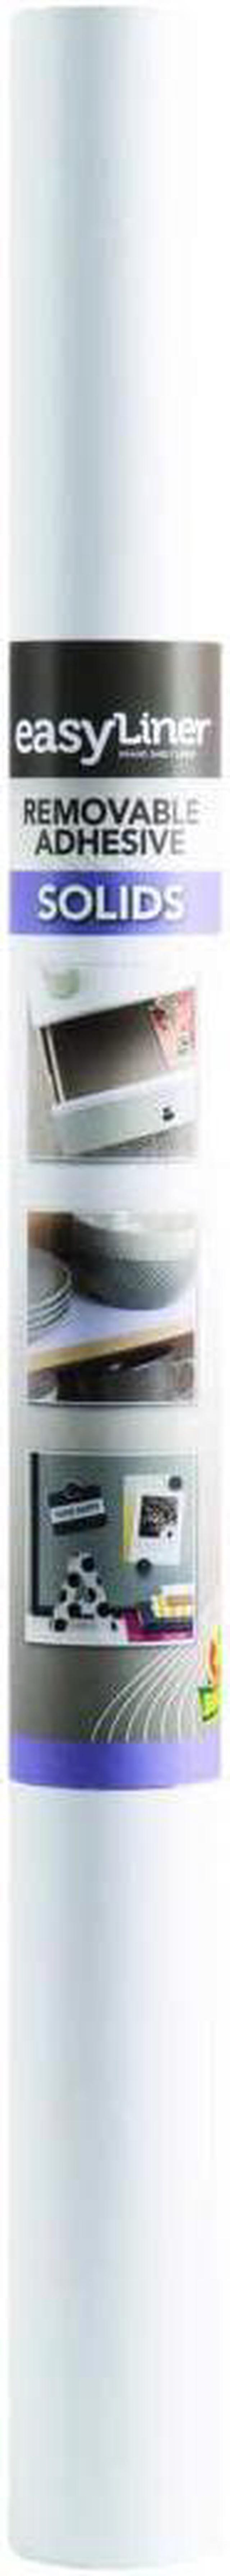 Duck Peel Stick Laminate, Adhesive Shelf Liner, 20 x 15', White